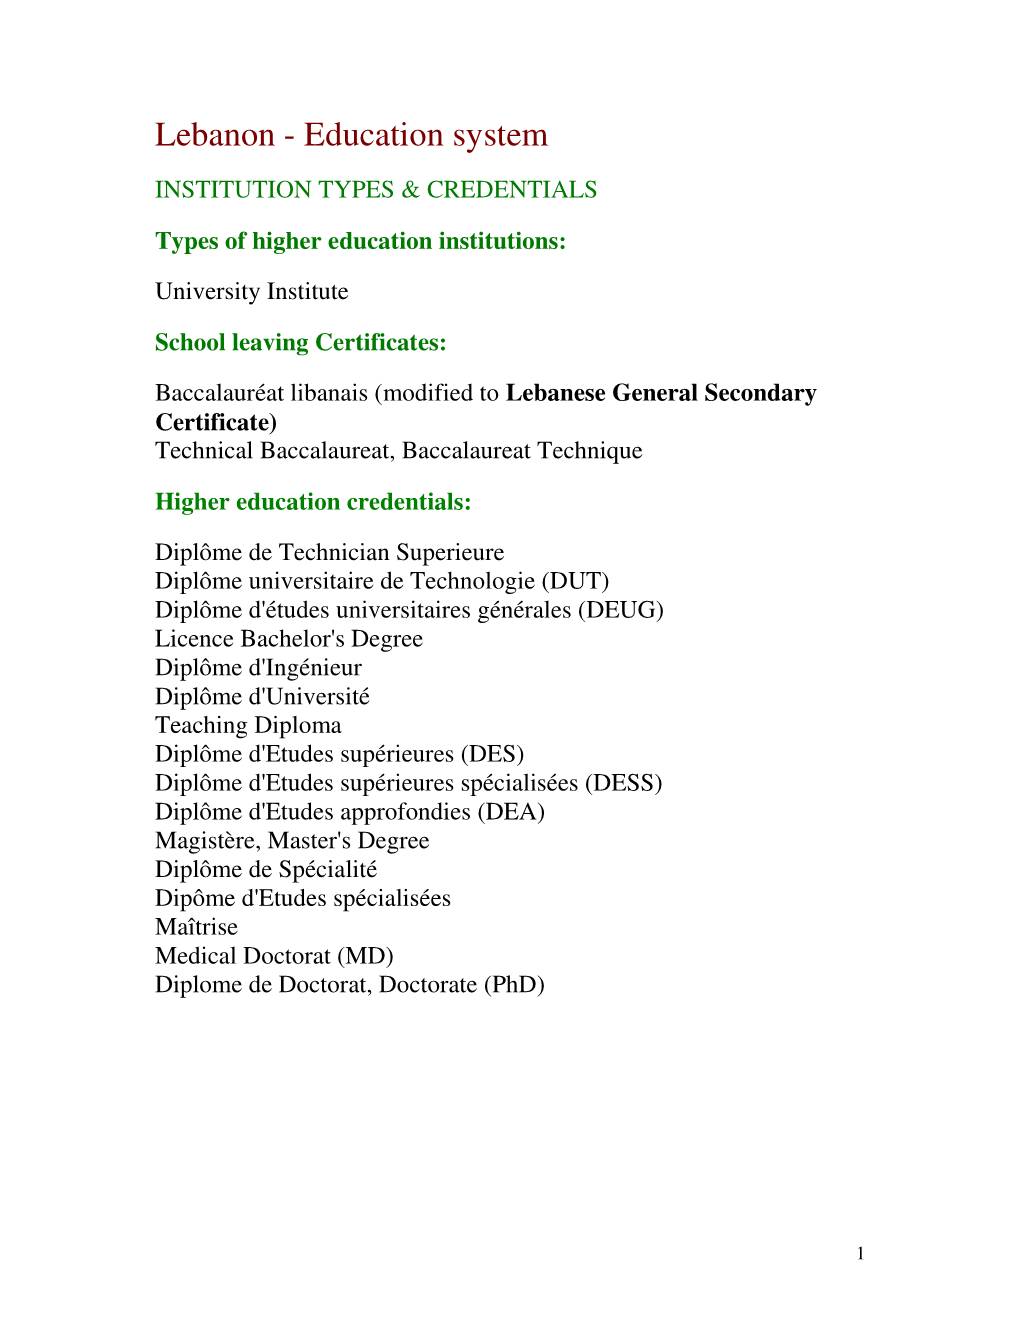 Lebanon - Education System INSTITUTION TYPES & CREDENTIALS